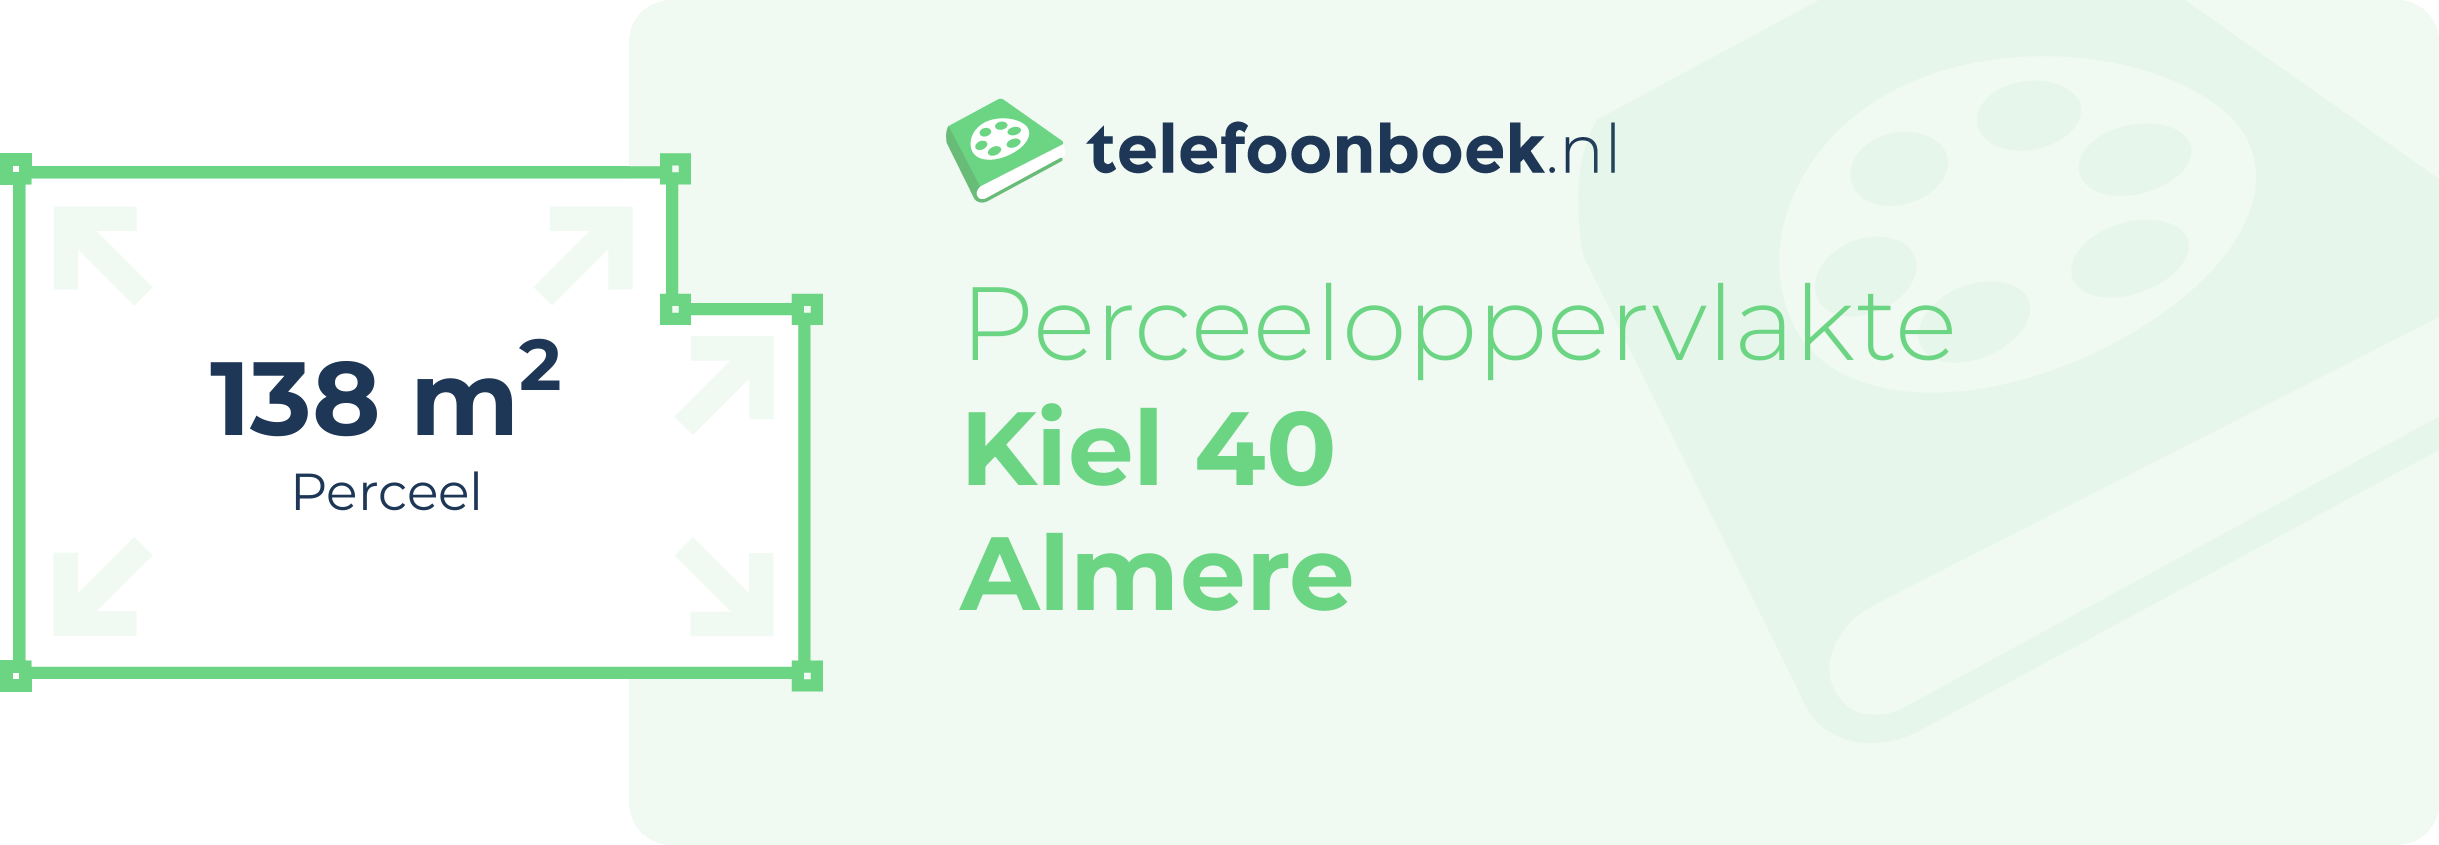 Perceeloppervlakte Kiel 40 Almere